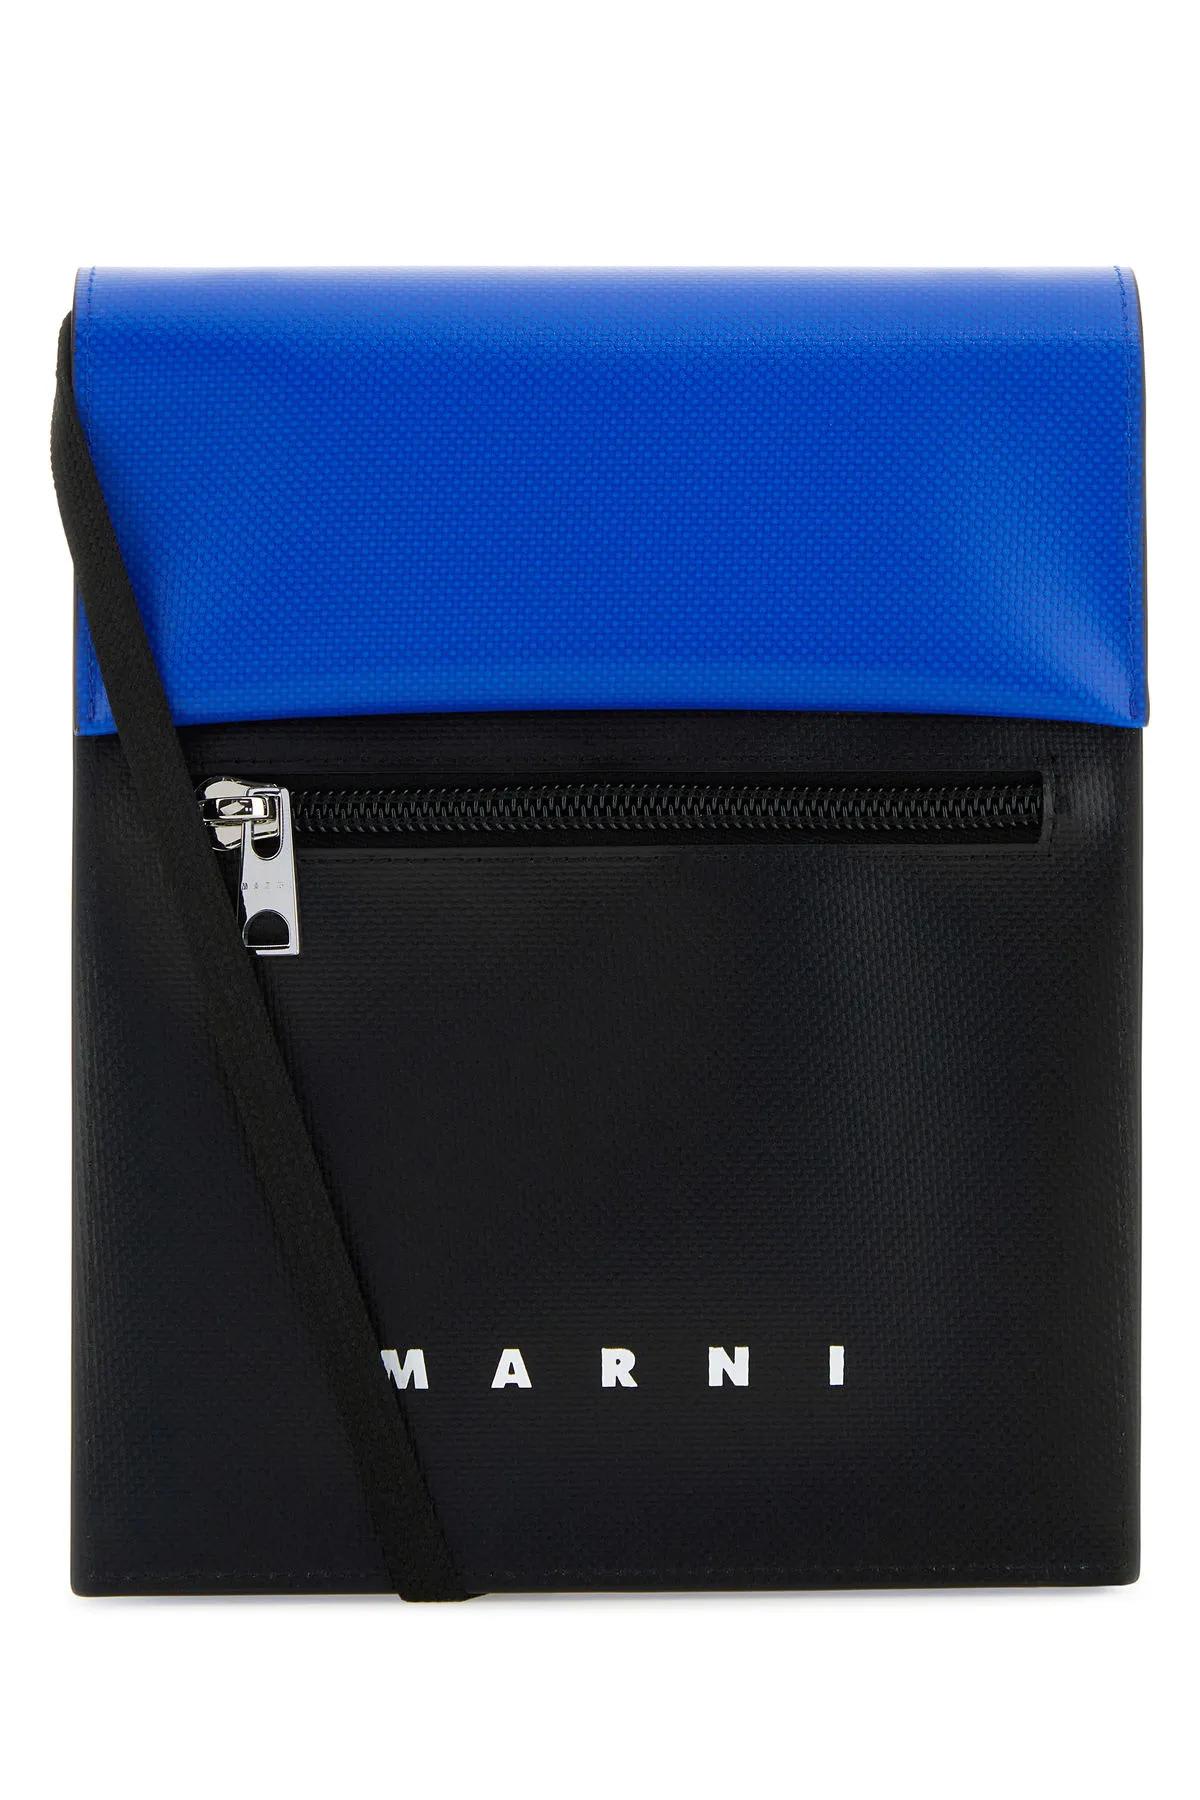 Marni Two-Tone Polyester Crossbody Bag